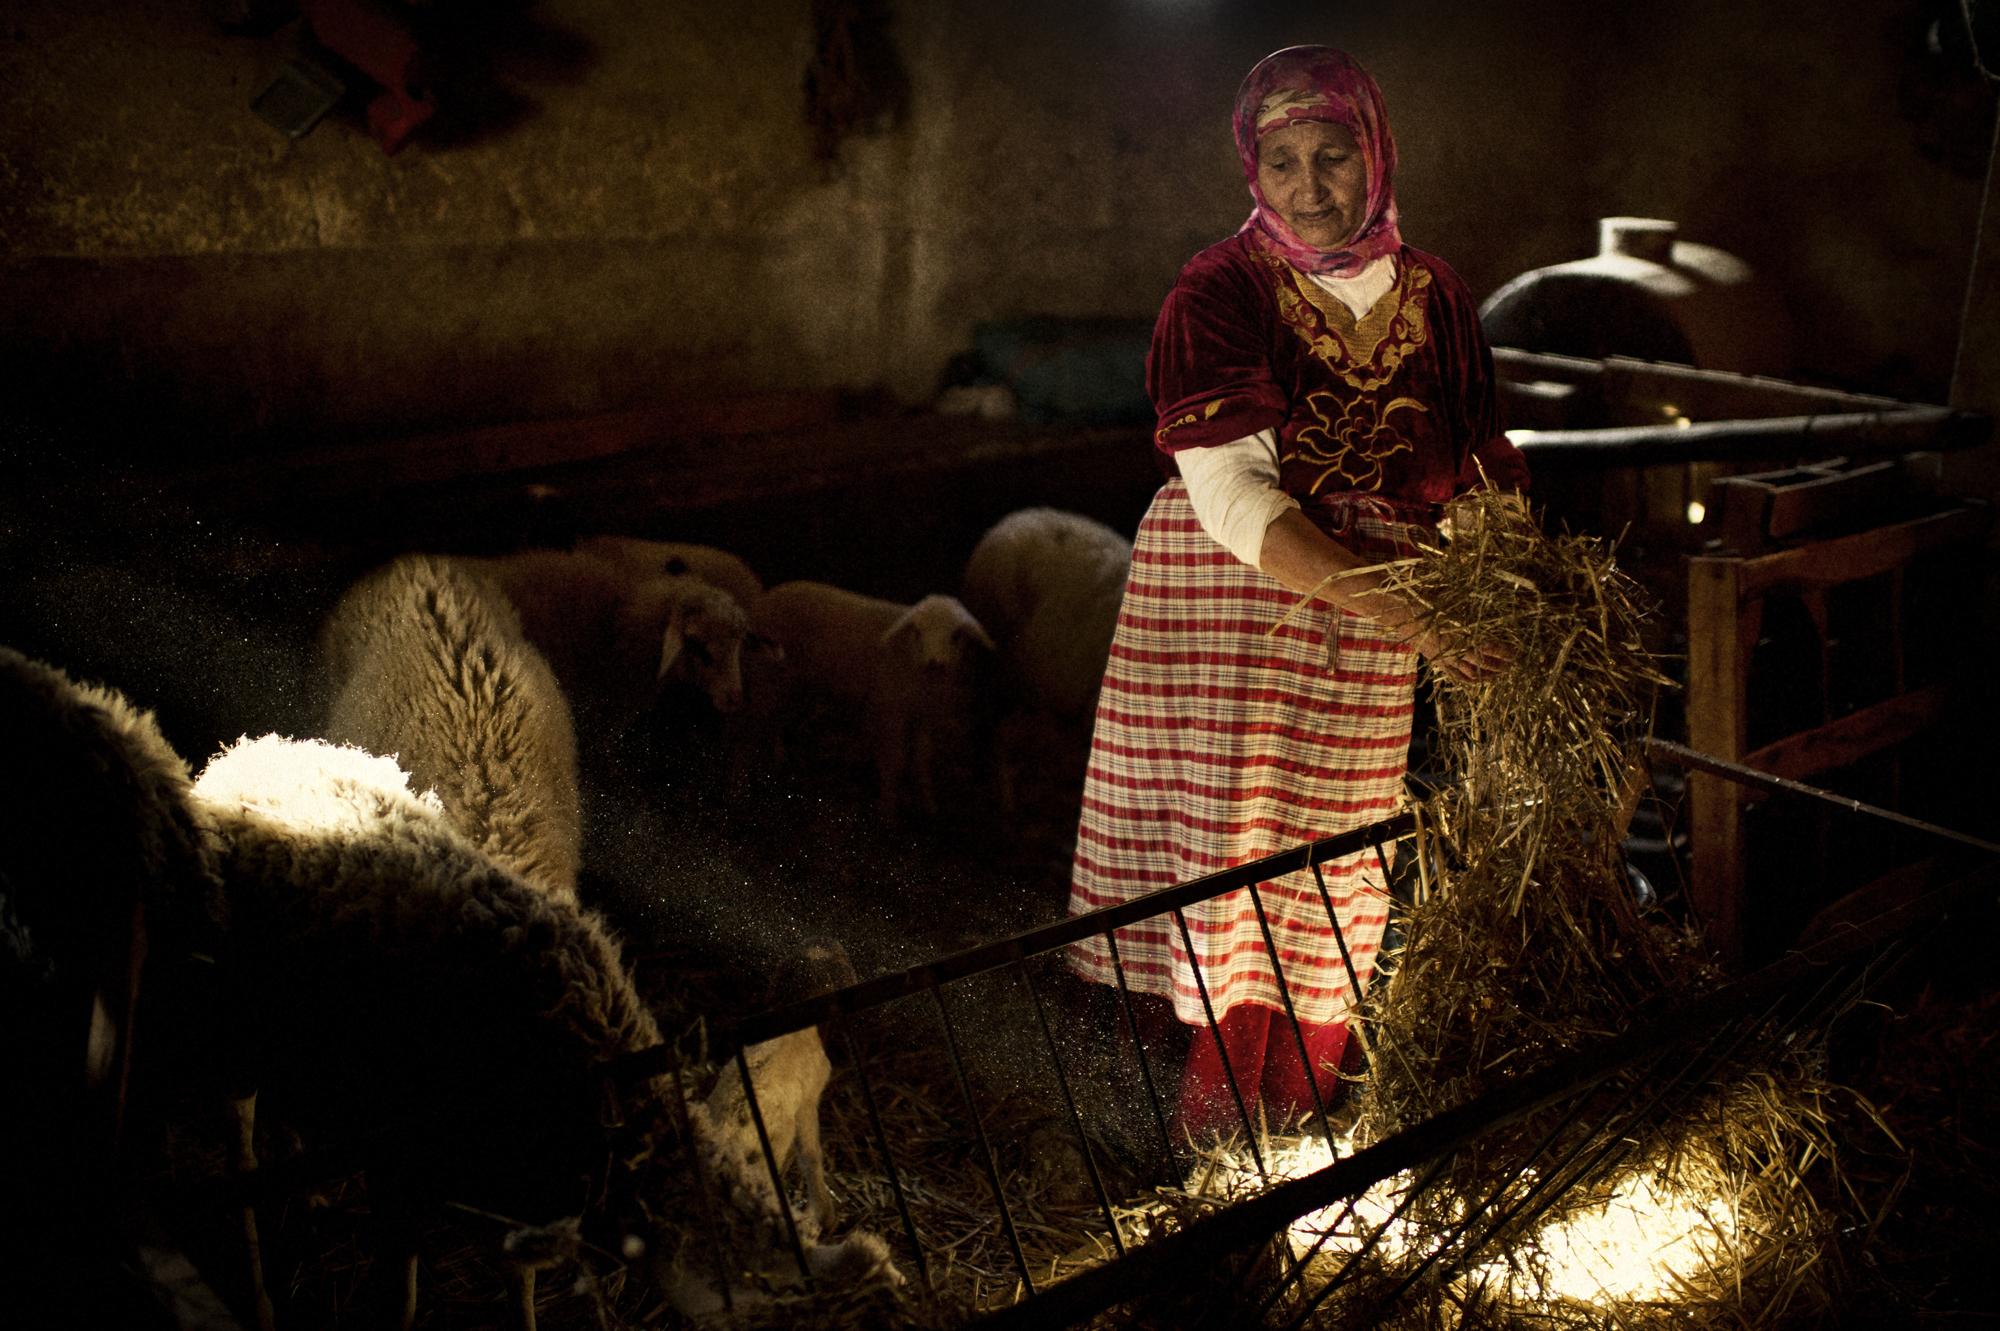 Microcredit / Morocco - Morocco, Oulad Taib. November 2011.
Aicha Khadraoui...